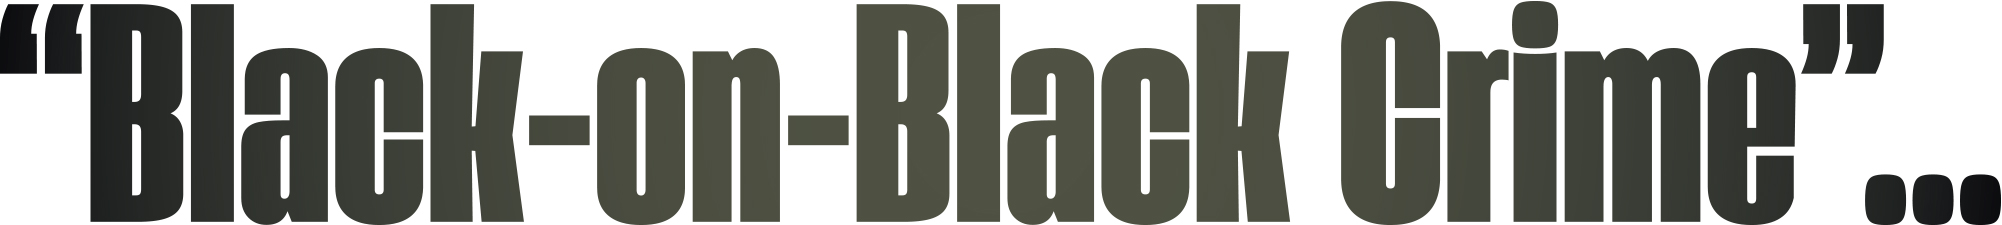 "Black-on-Black Crime"... typography